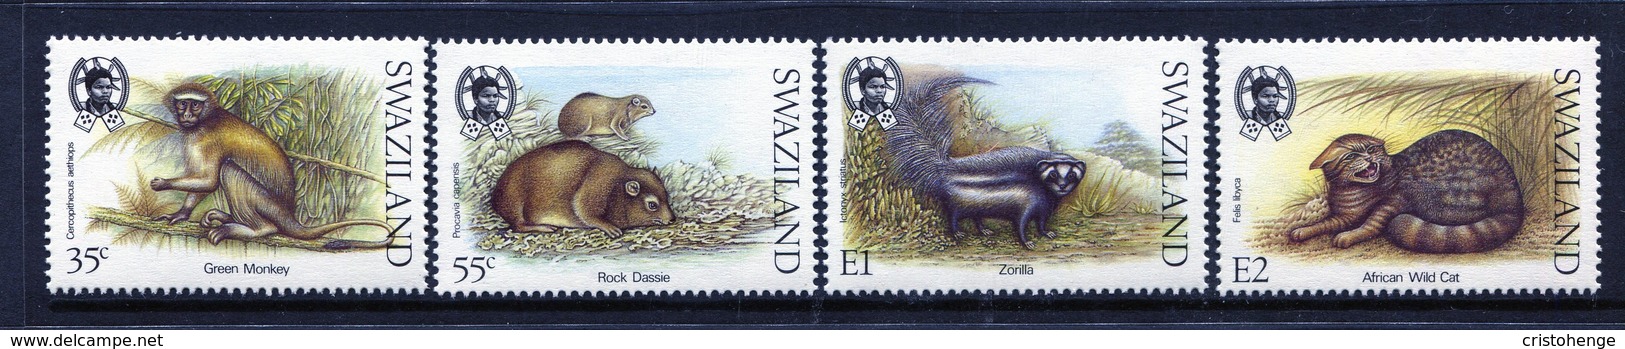 Swaziland 1989 Small Mammals Set MNH (SG 549-552) - Swaziland (1968-...)